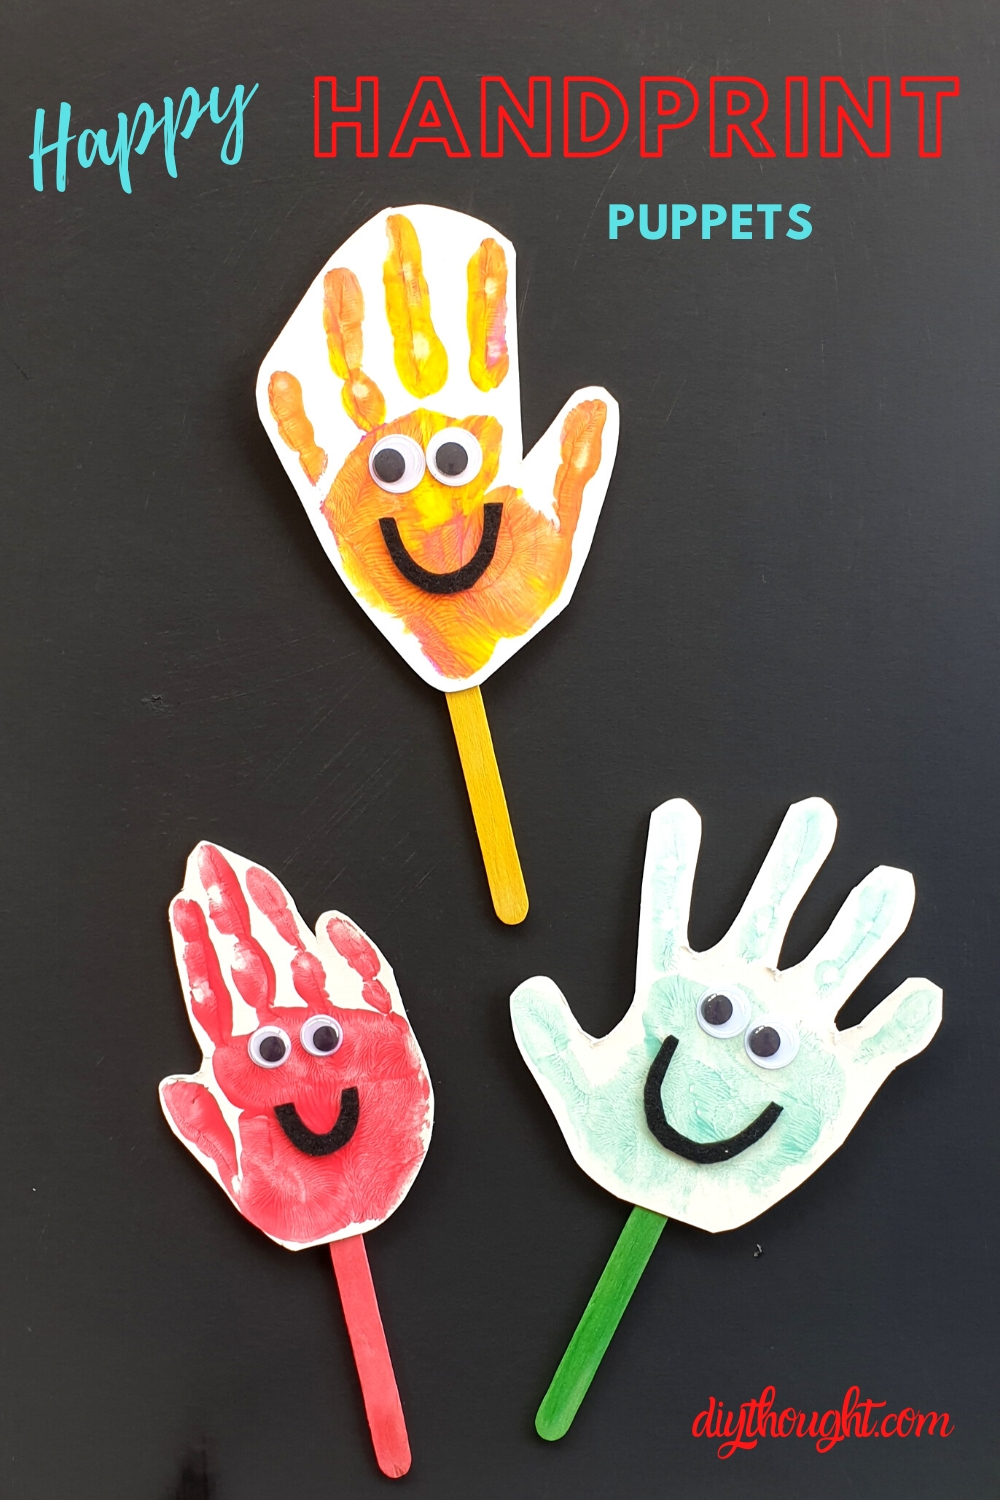 happy handprint puppets